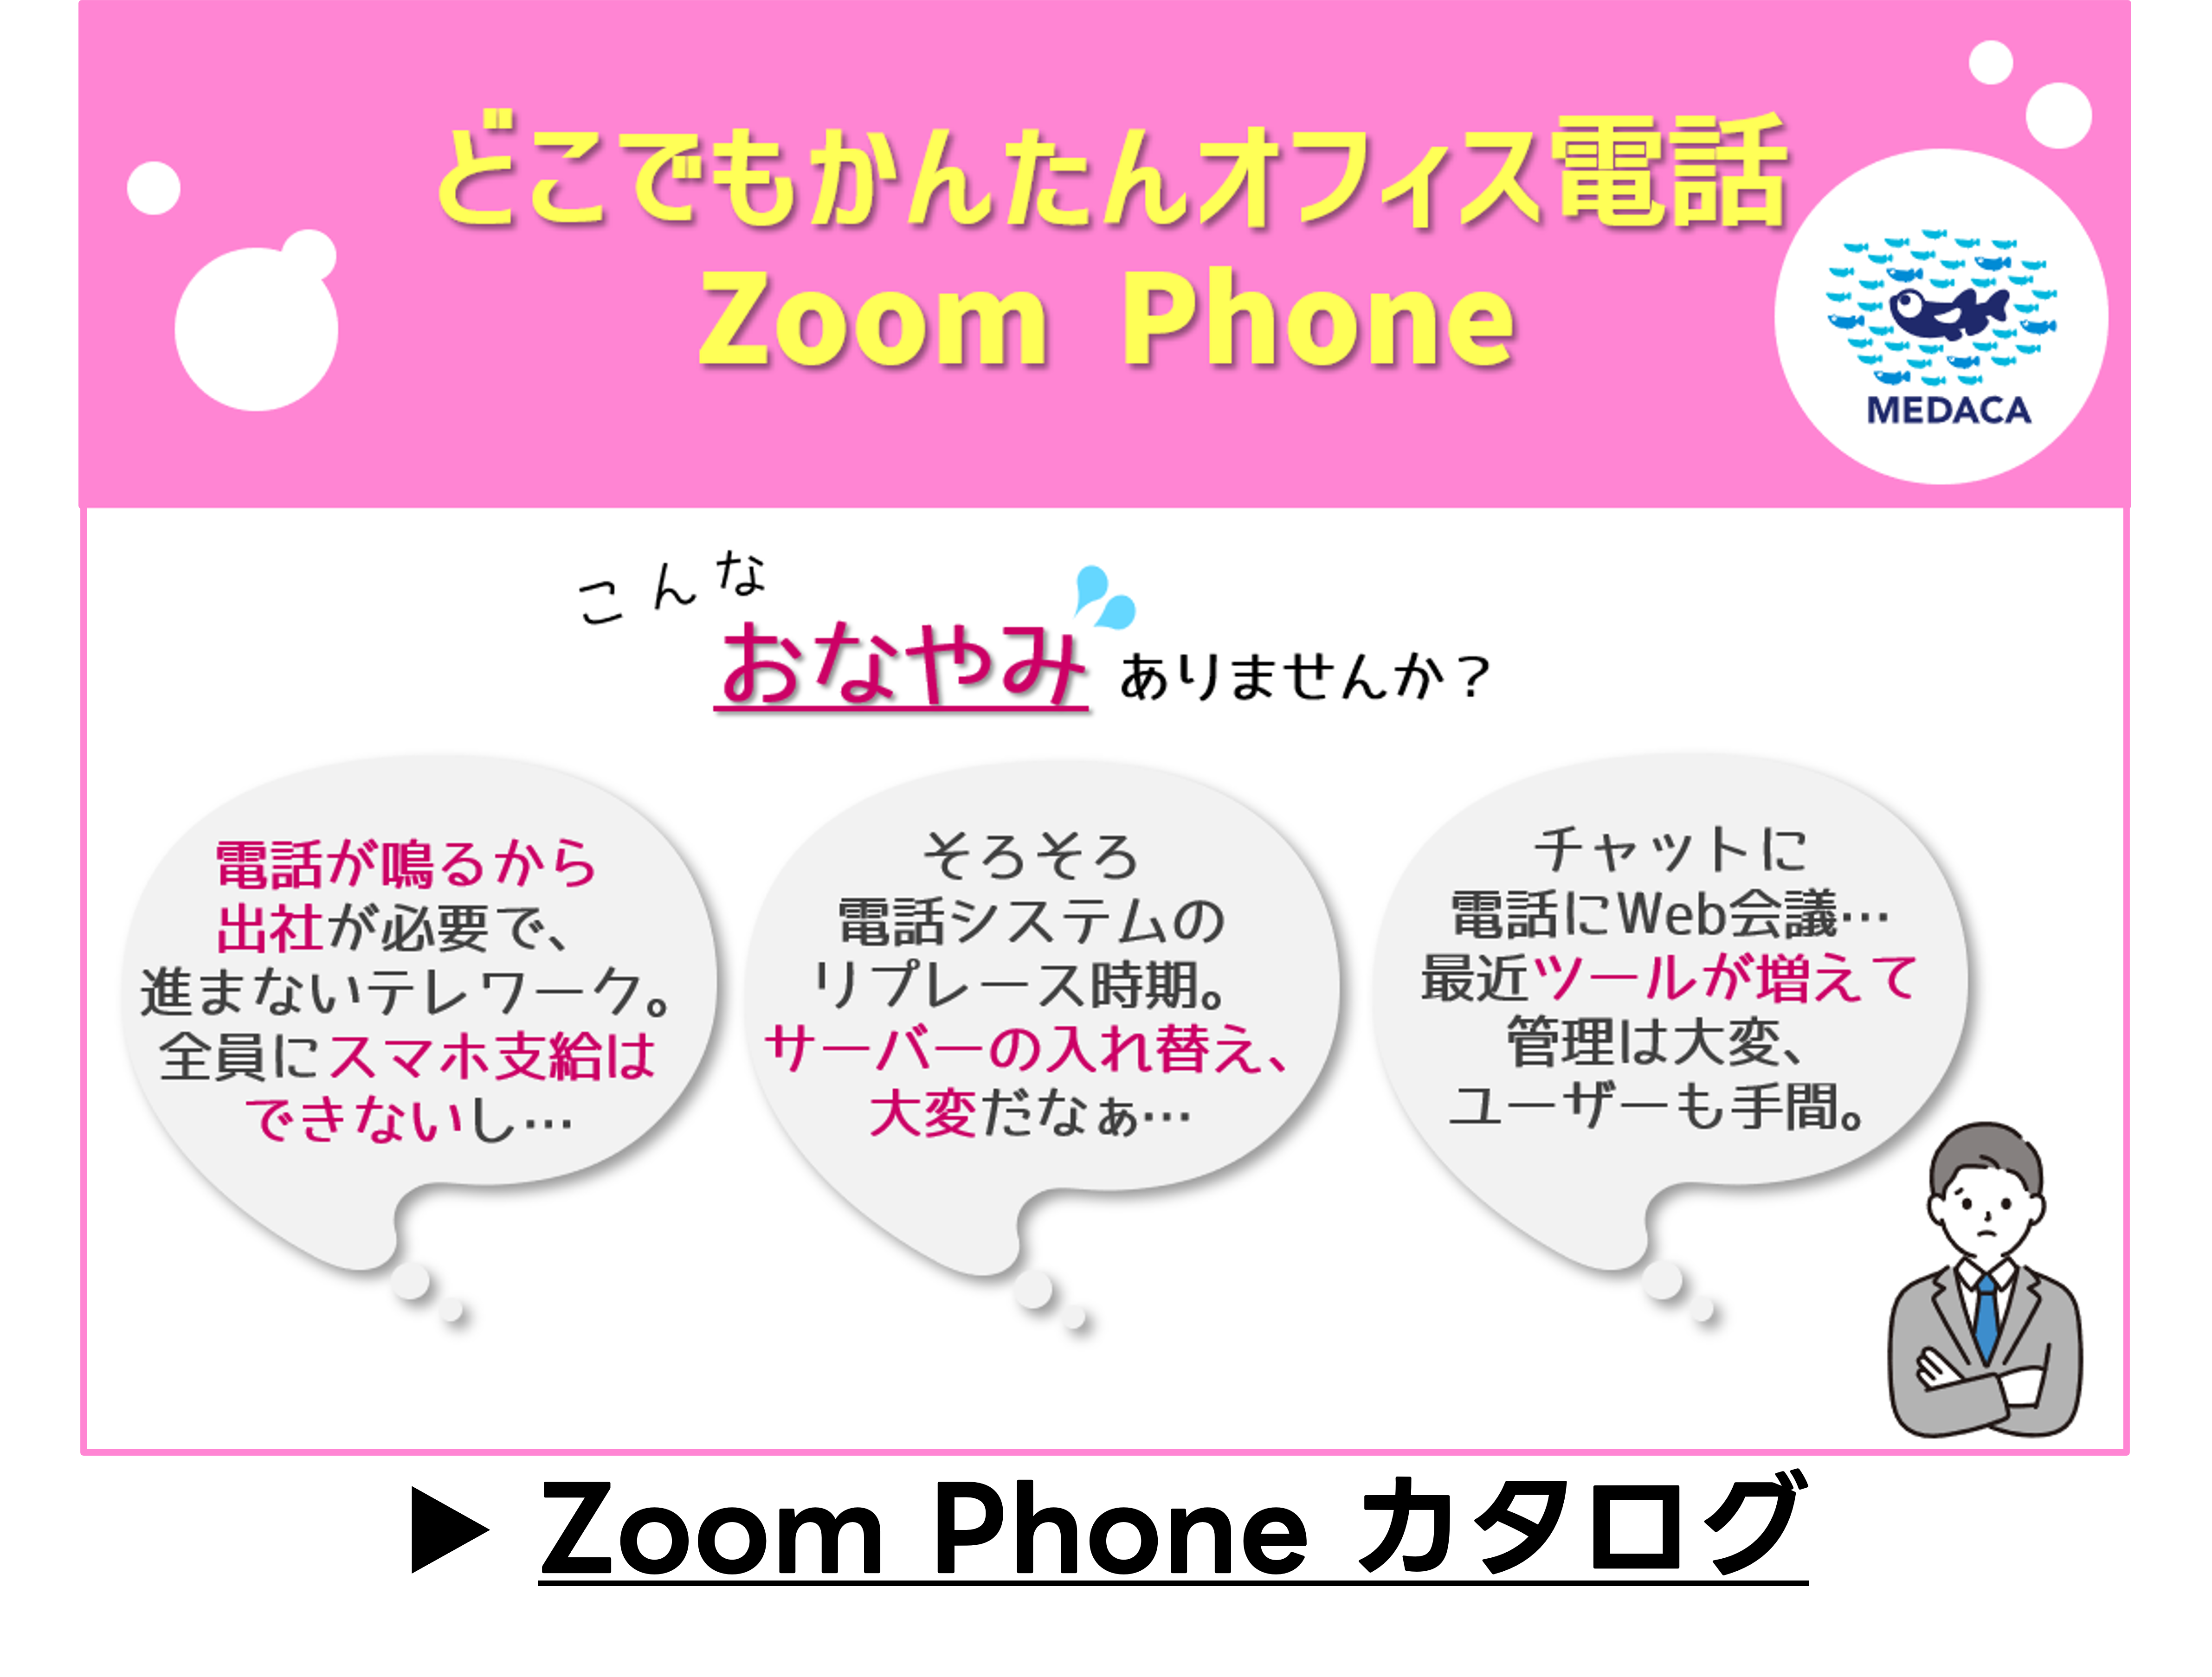 Zoom Phone カタログ